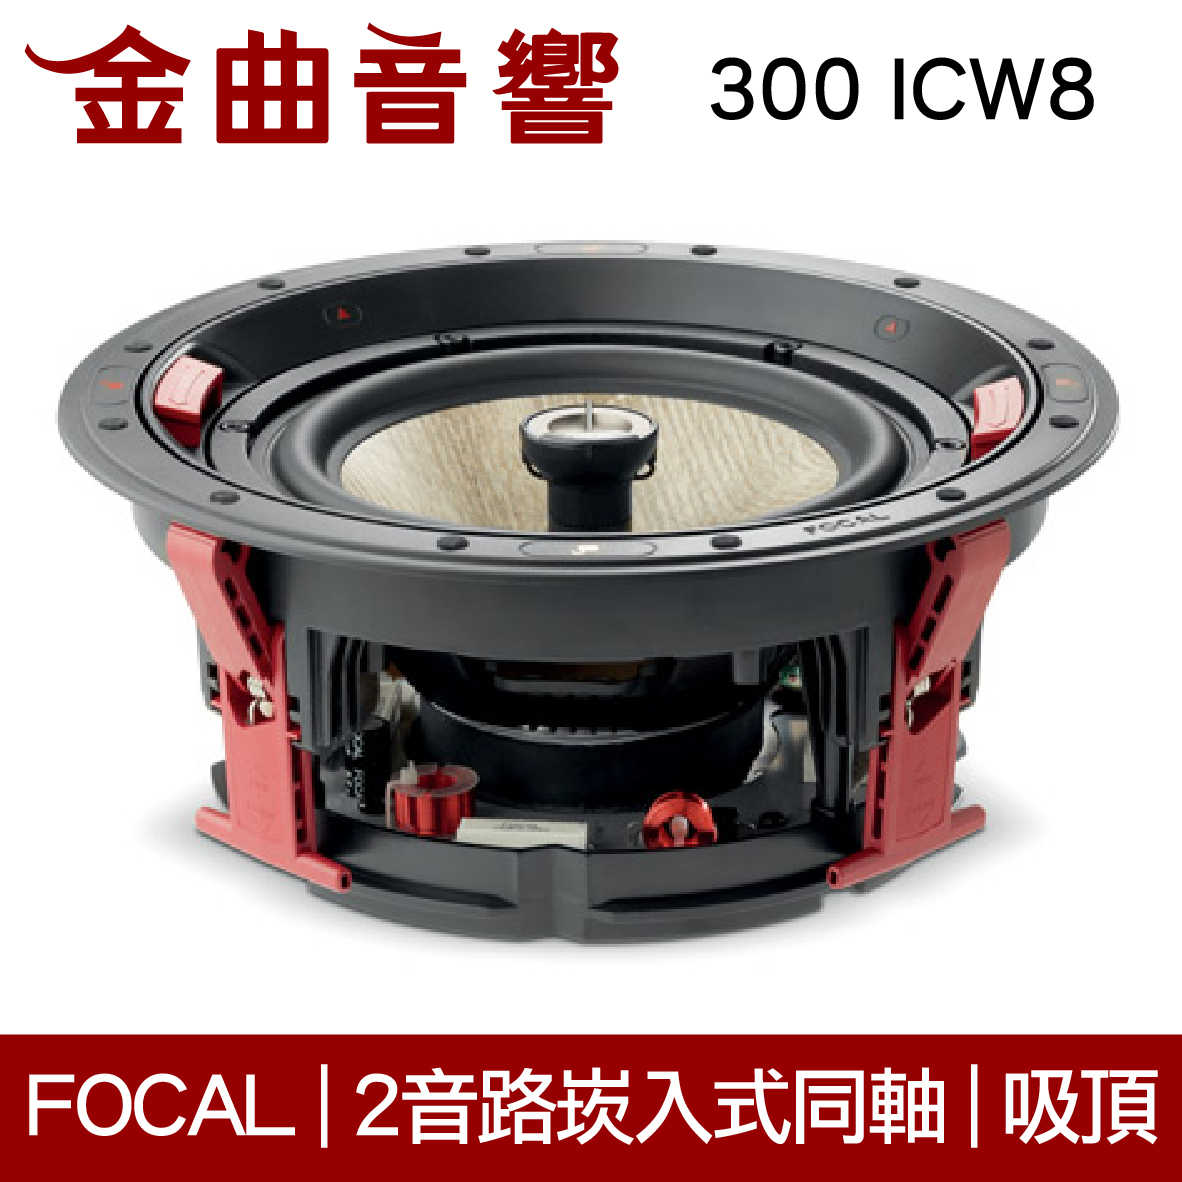 FOCAL 300 ICW8 崁入式 喇叭 吸頂喇叭 音響（單隻）| 金曲音響